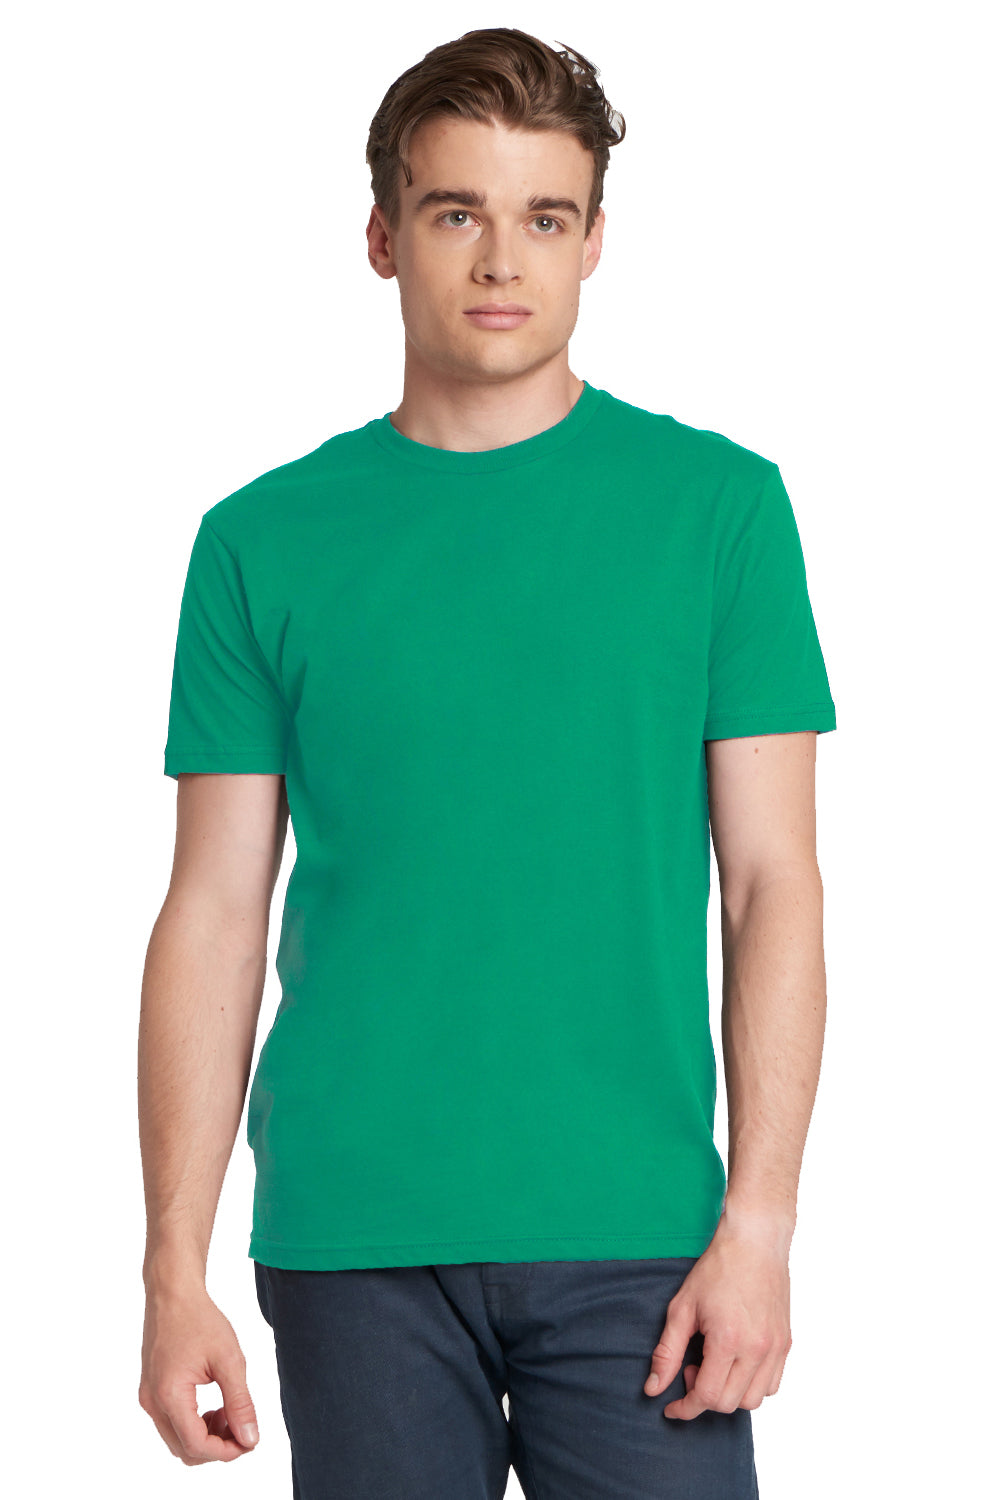 Next Level 3600 Mens Fine Jersey Short Sleeve Crewneck T-Shirt Kelly Green Front